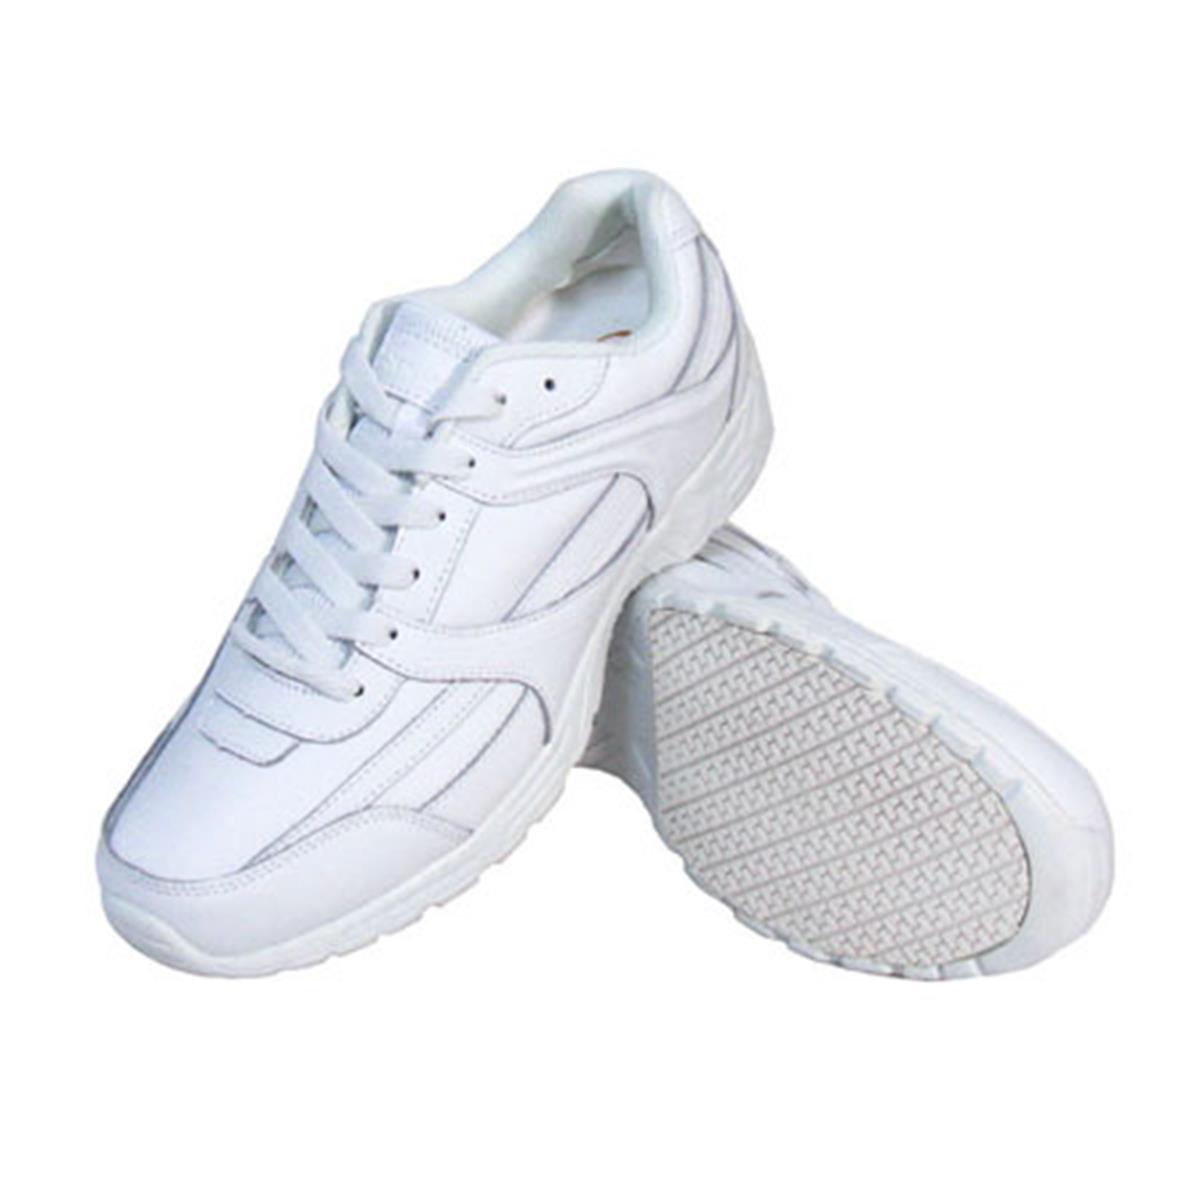 Genuine Grip Footwear- 1015 Men's Athletic White Shoe-eSafety Supplies, Inc